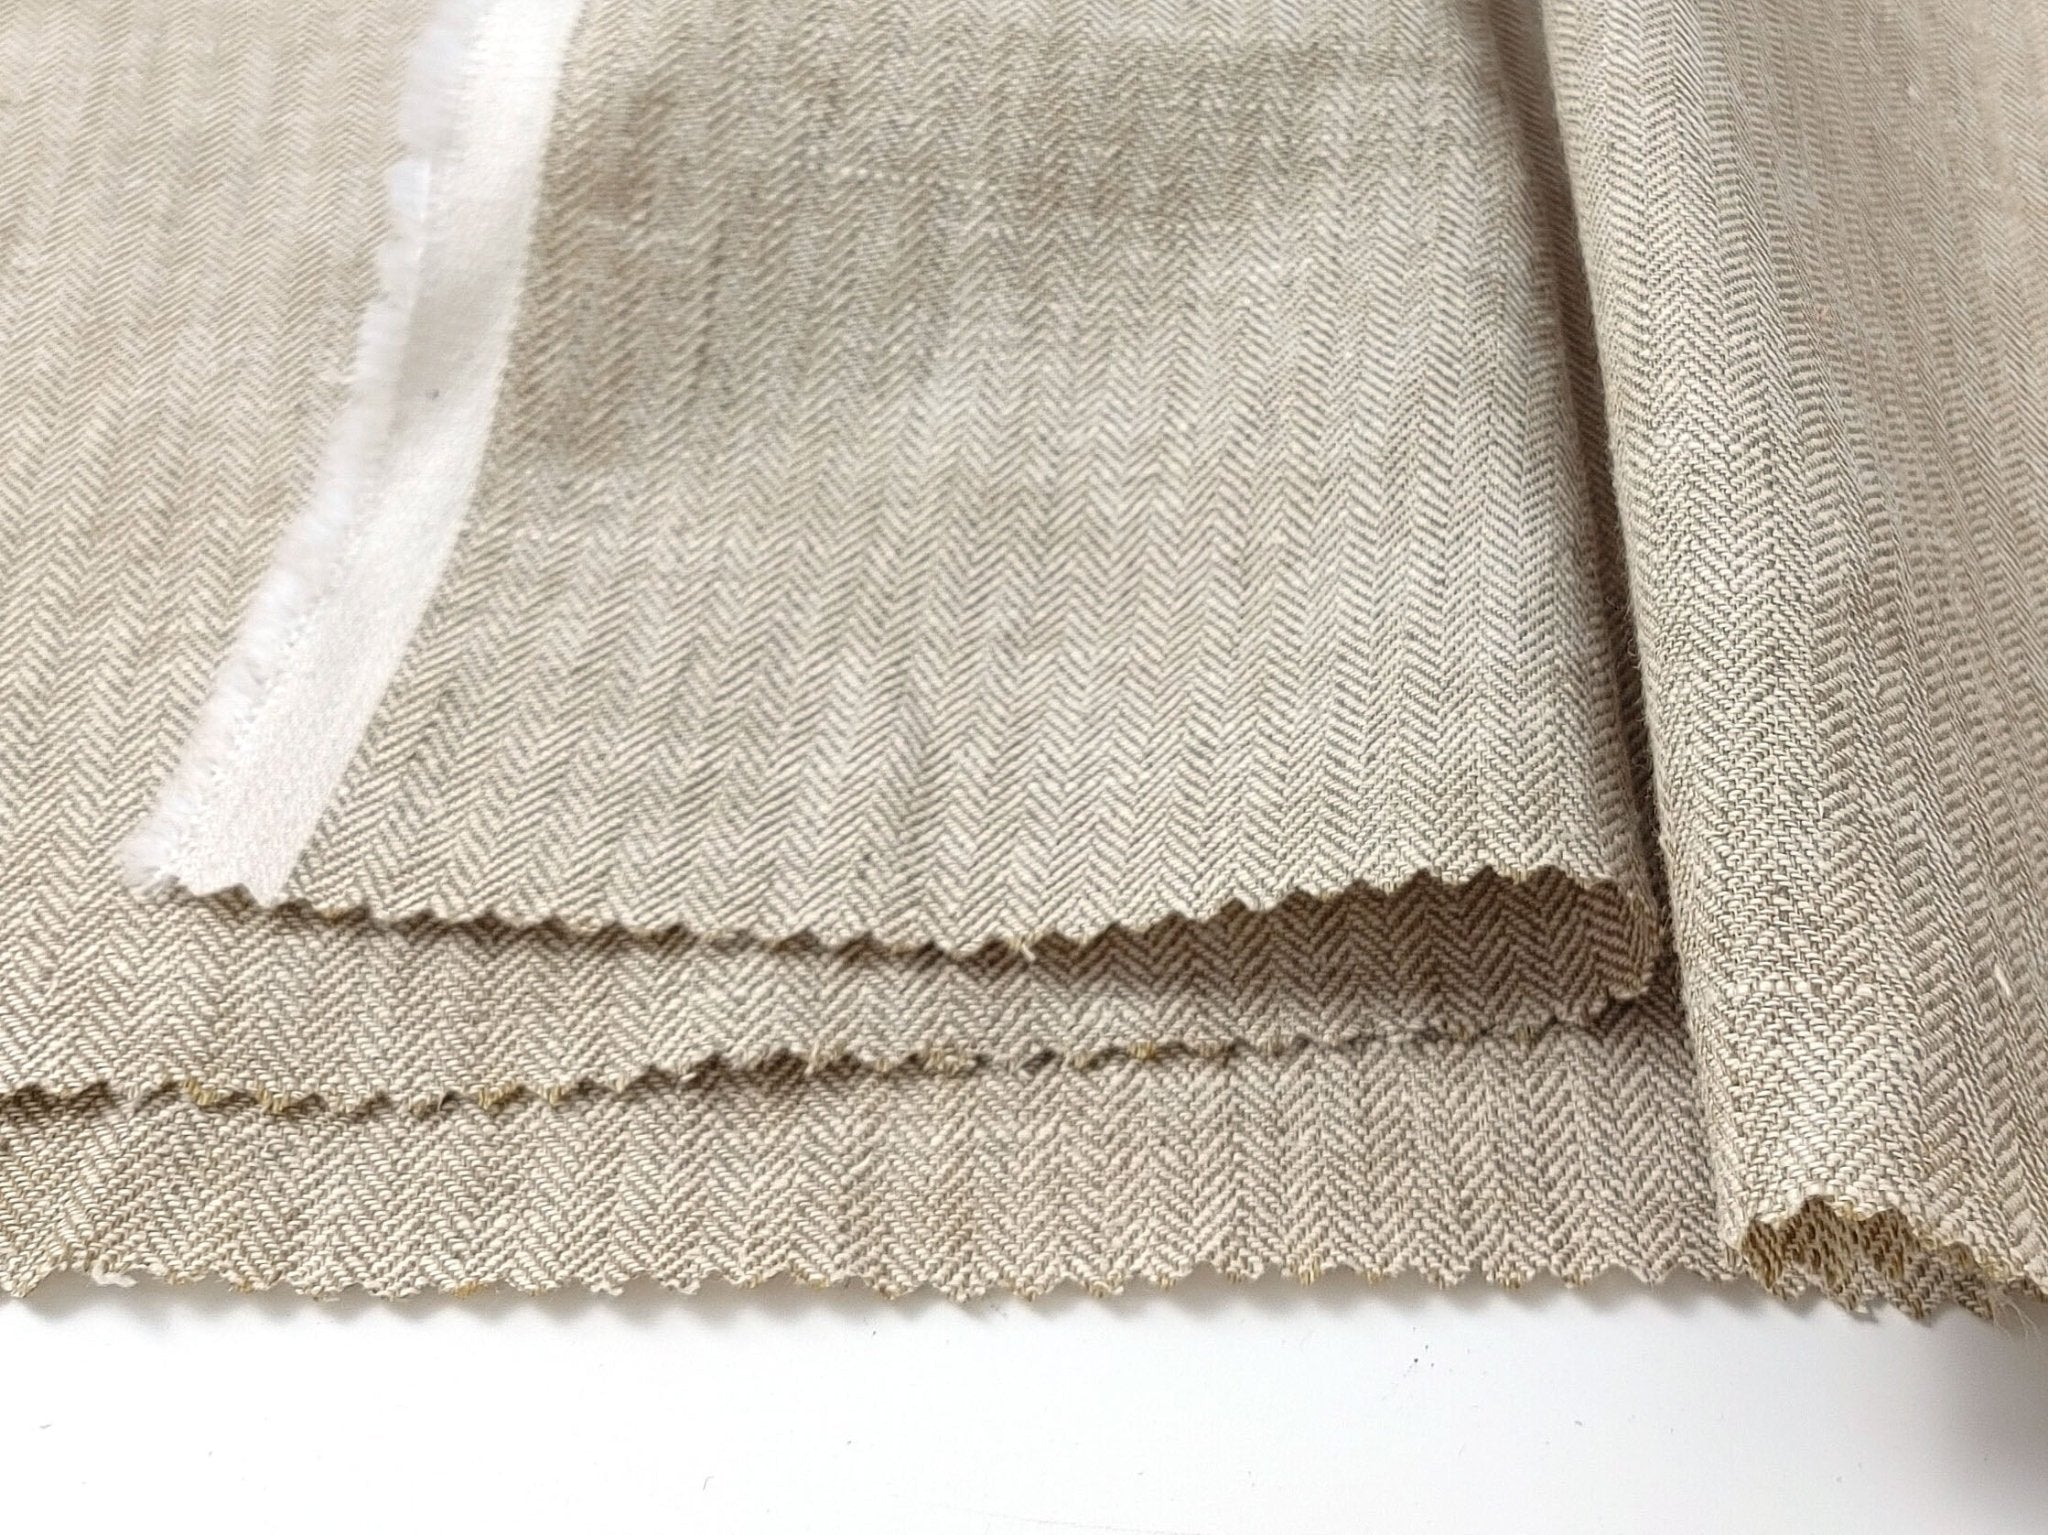 HBT Linen Ramie Cotton Blend Fabric: Yarn Dyed Chambray, Medium Weight 7837 7838 7840 - The Linen Lab - Beige